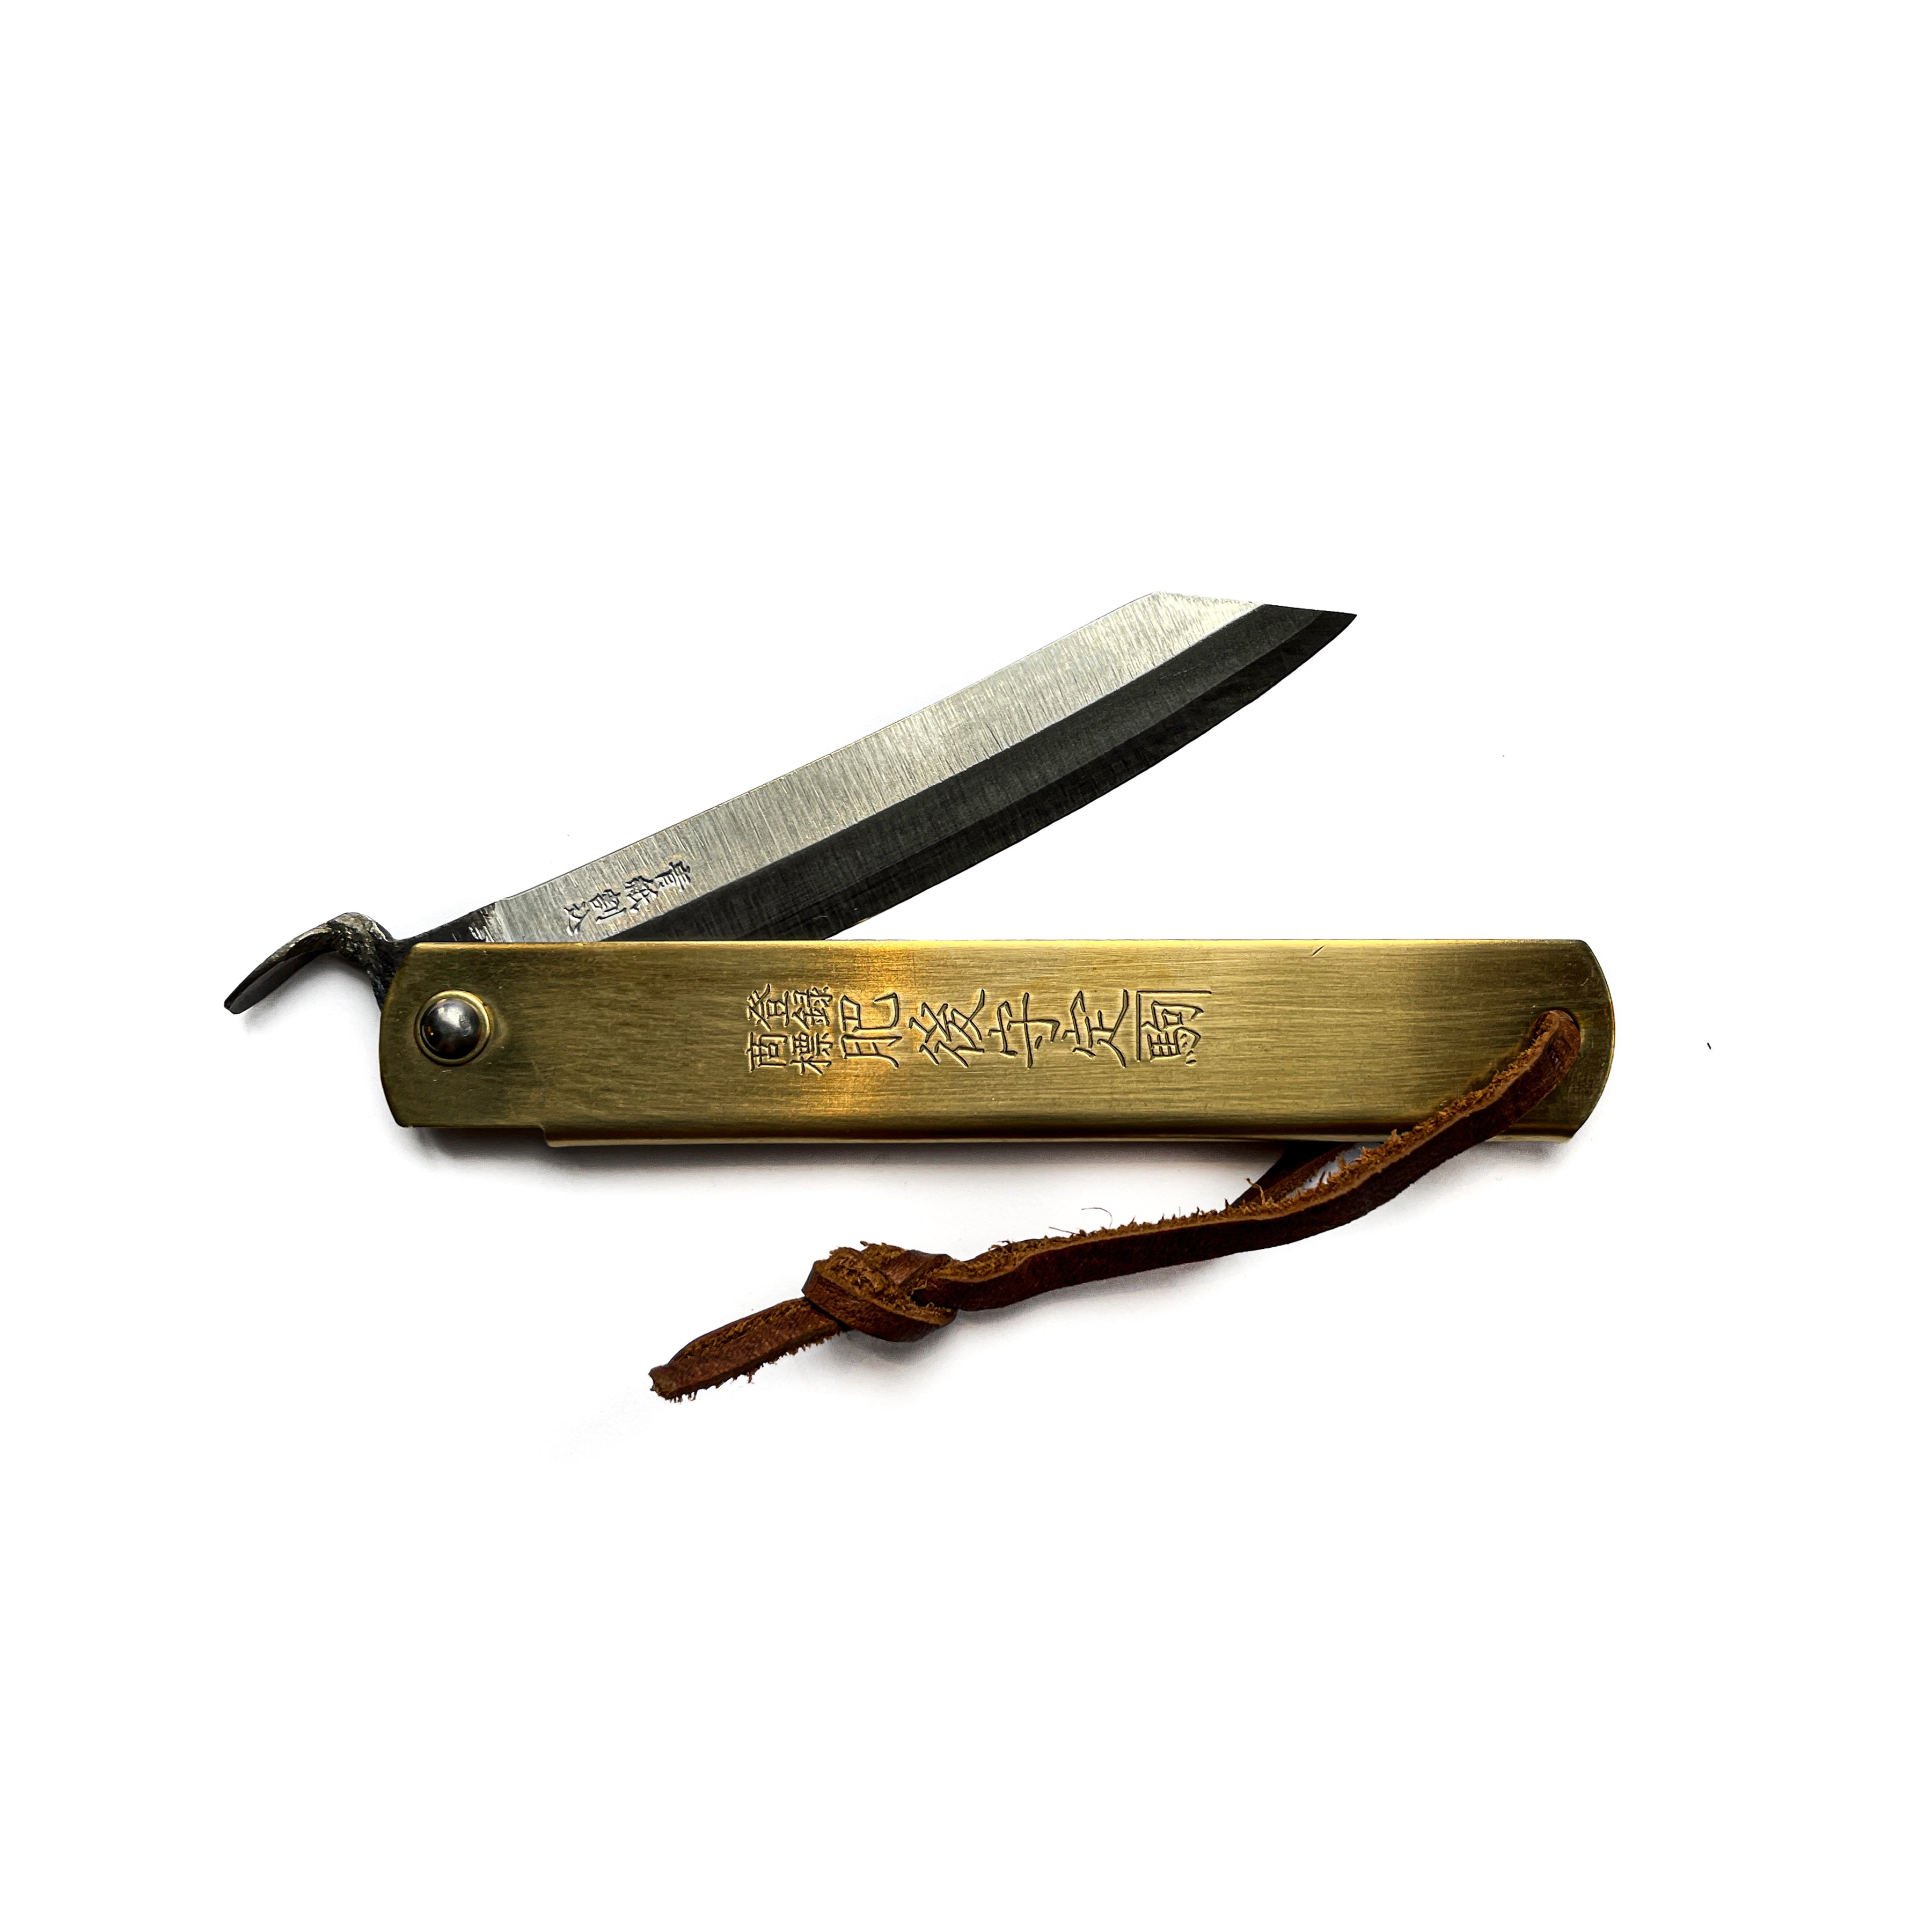 Higo No Kami Japanese Pocket Knife, Brass 100mm - Whisk